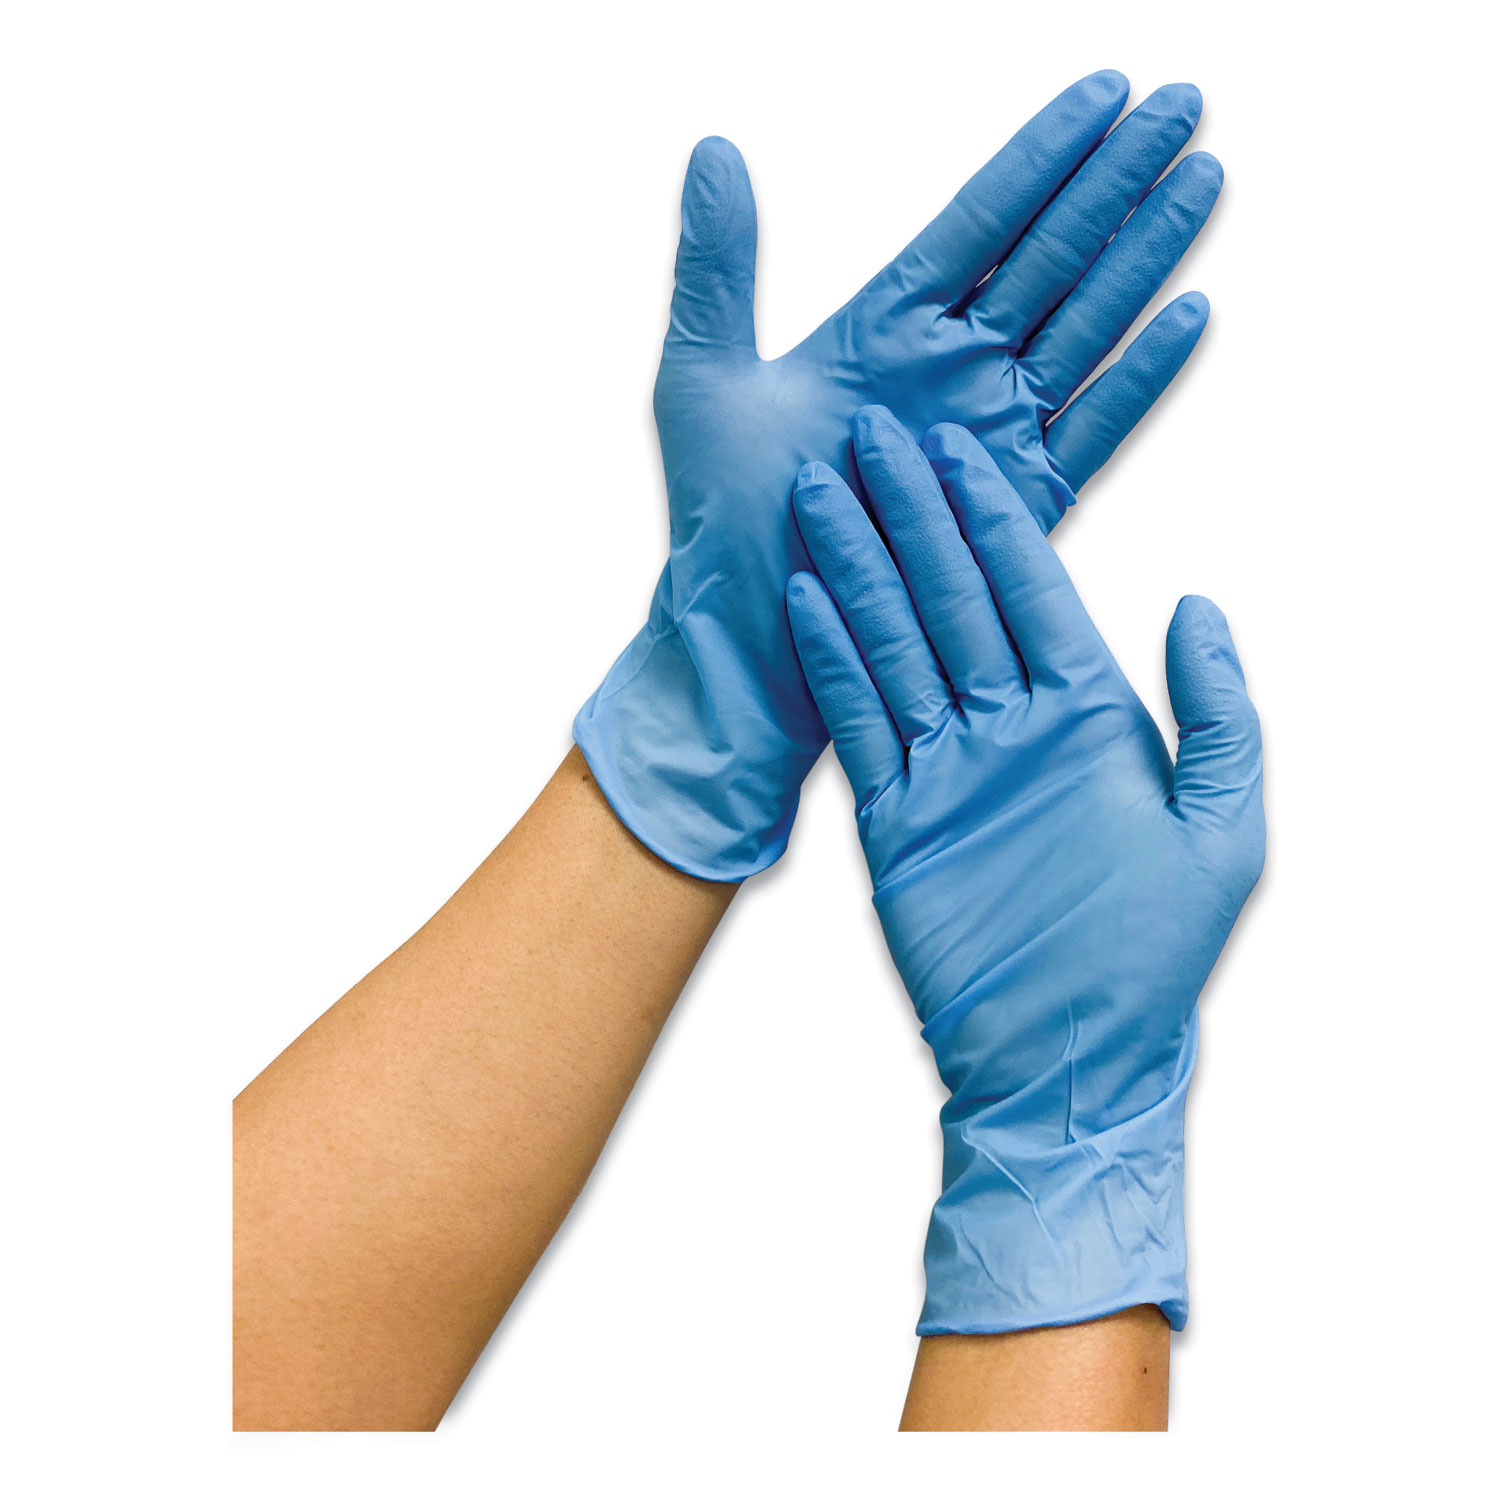  GN1 PE16919 Powder-Free Nitrile Gloves, Blue, Large, 1,000/Carton (GN1PE16919) 